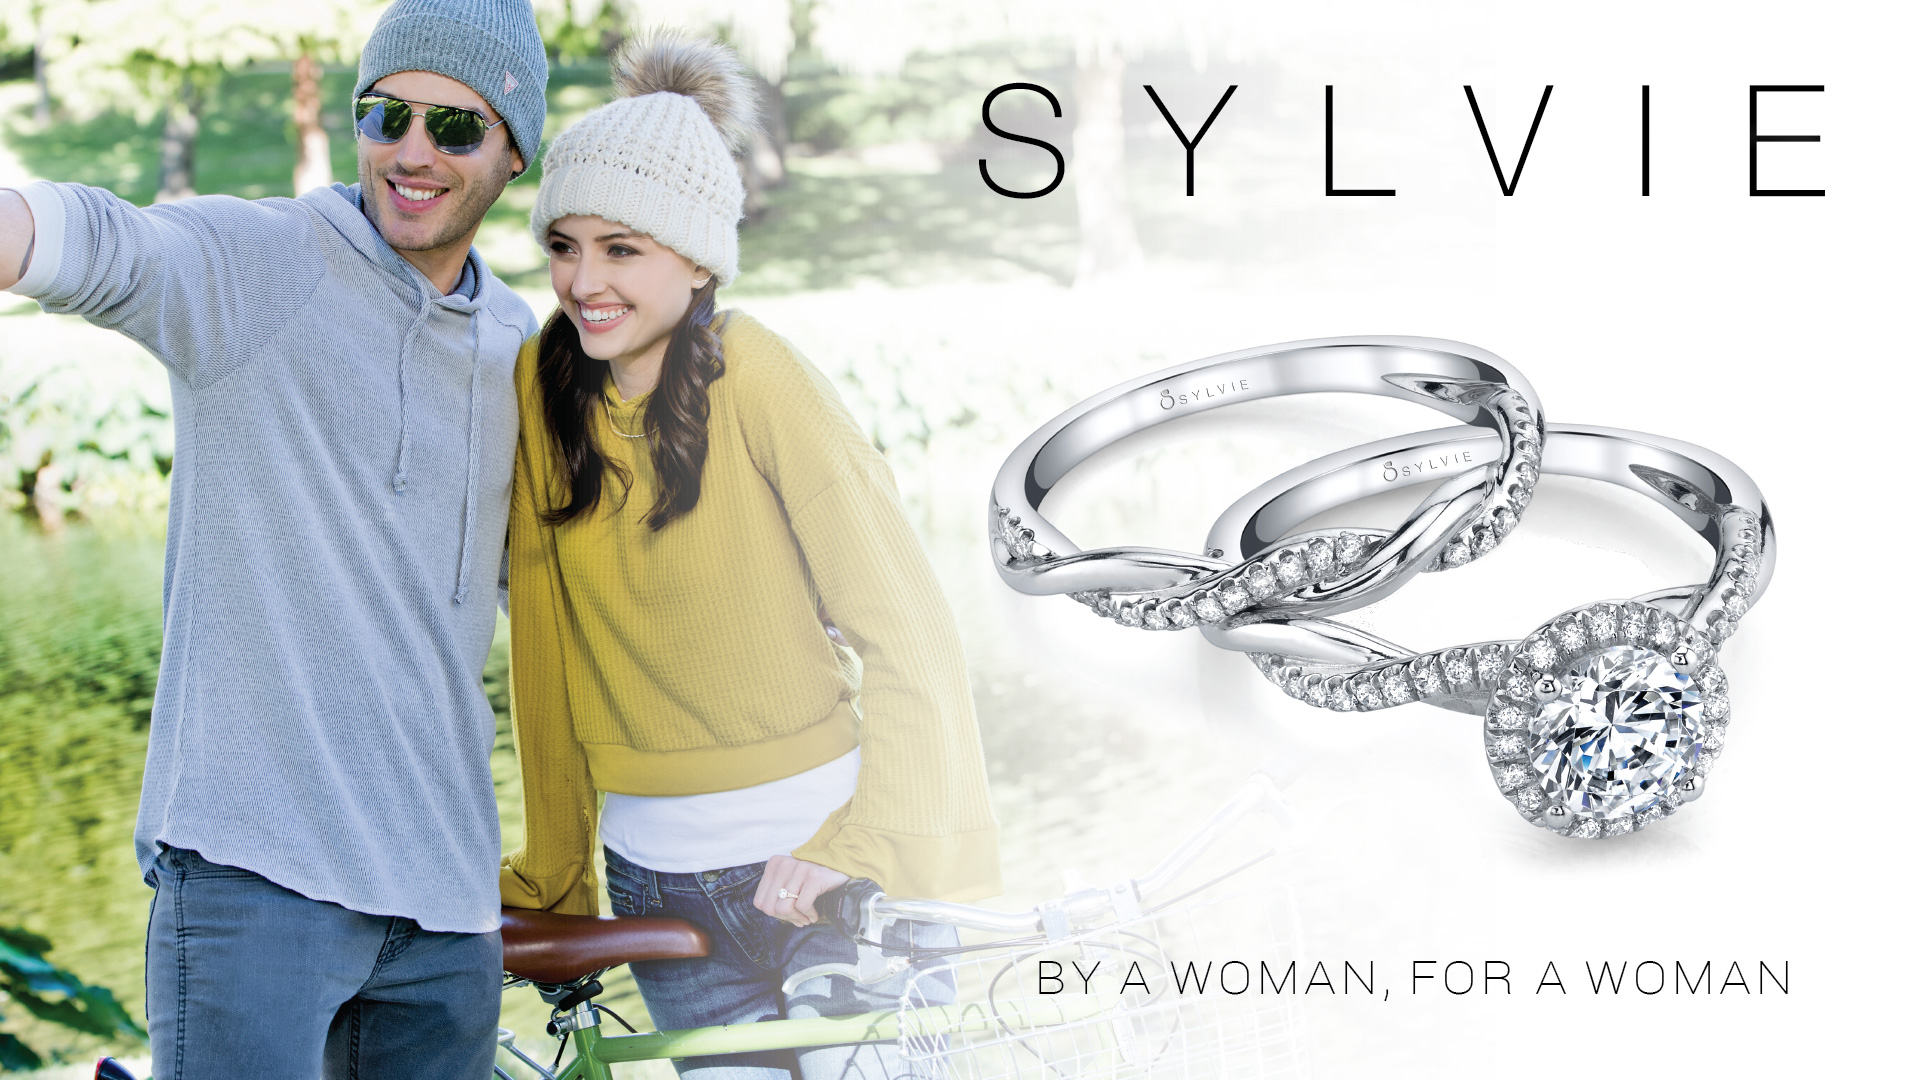 Sylvie, Engagement Rings, Diamond, Diamonds, Diamond Rings, Jewelry, Fine Jewelry, Jewelry Stores, Geiss and Sons, Greenville, South Carolina